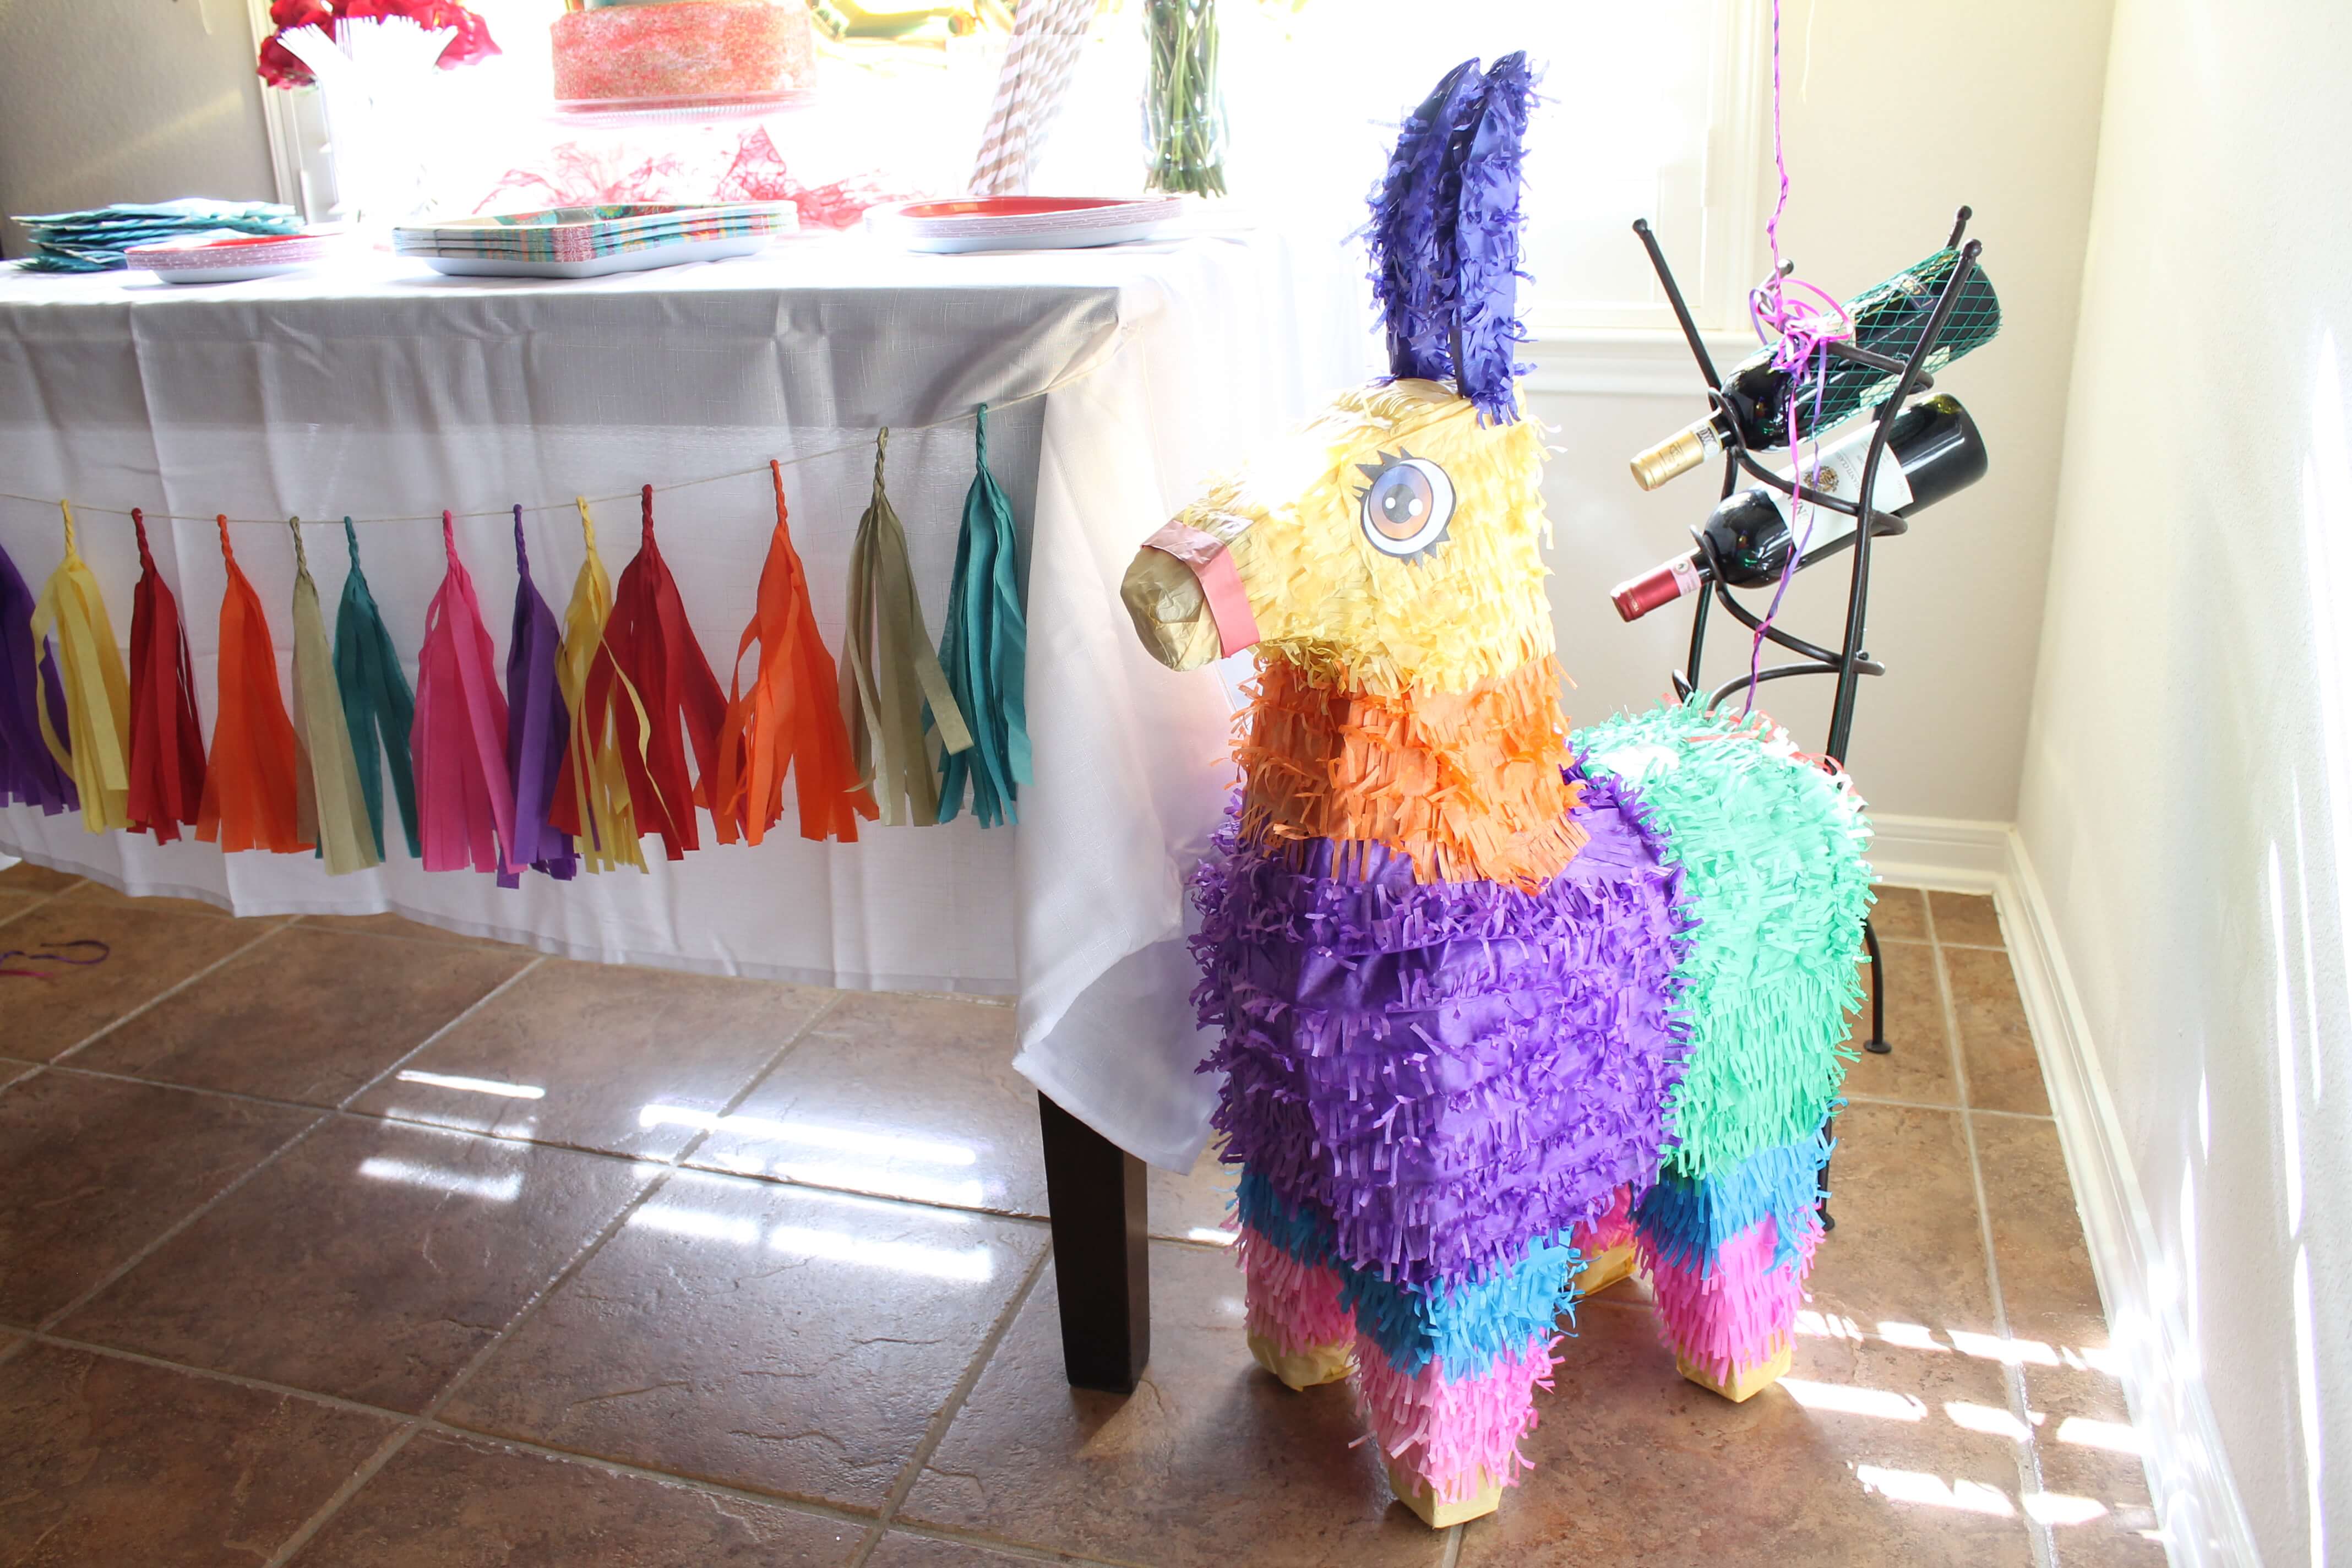 Elena of Avalor birthday party decor. The cutest themed fiesta inspiration.